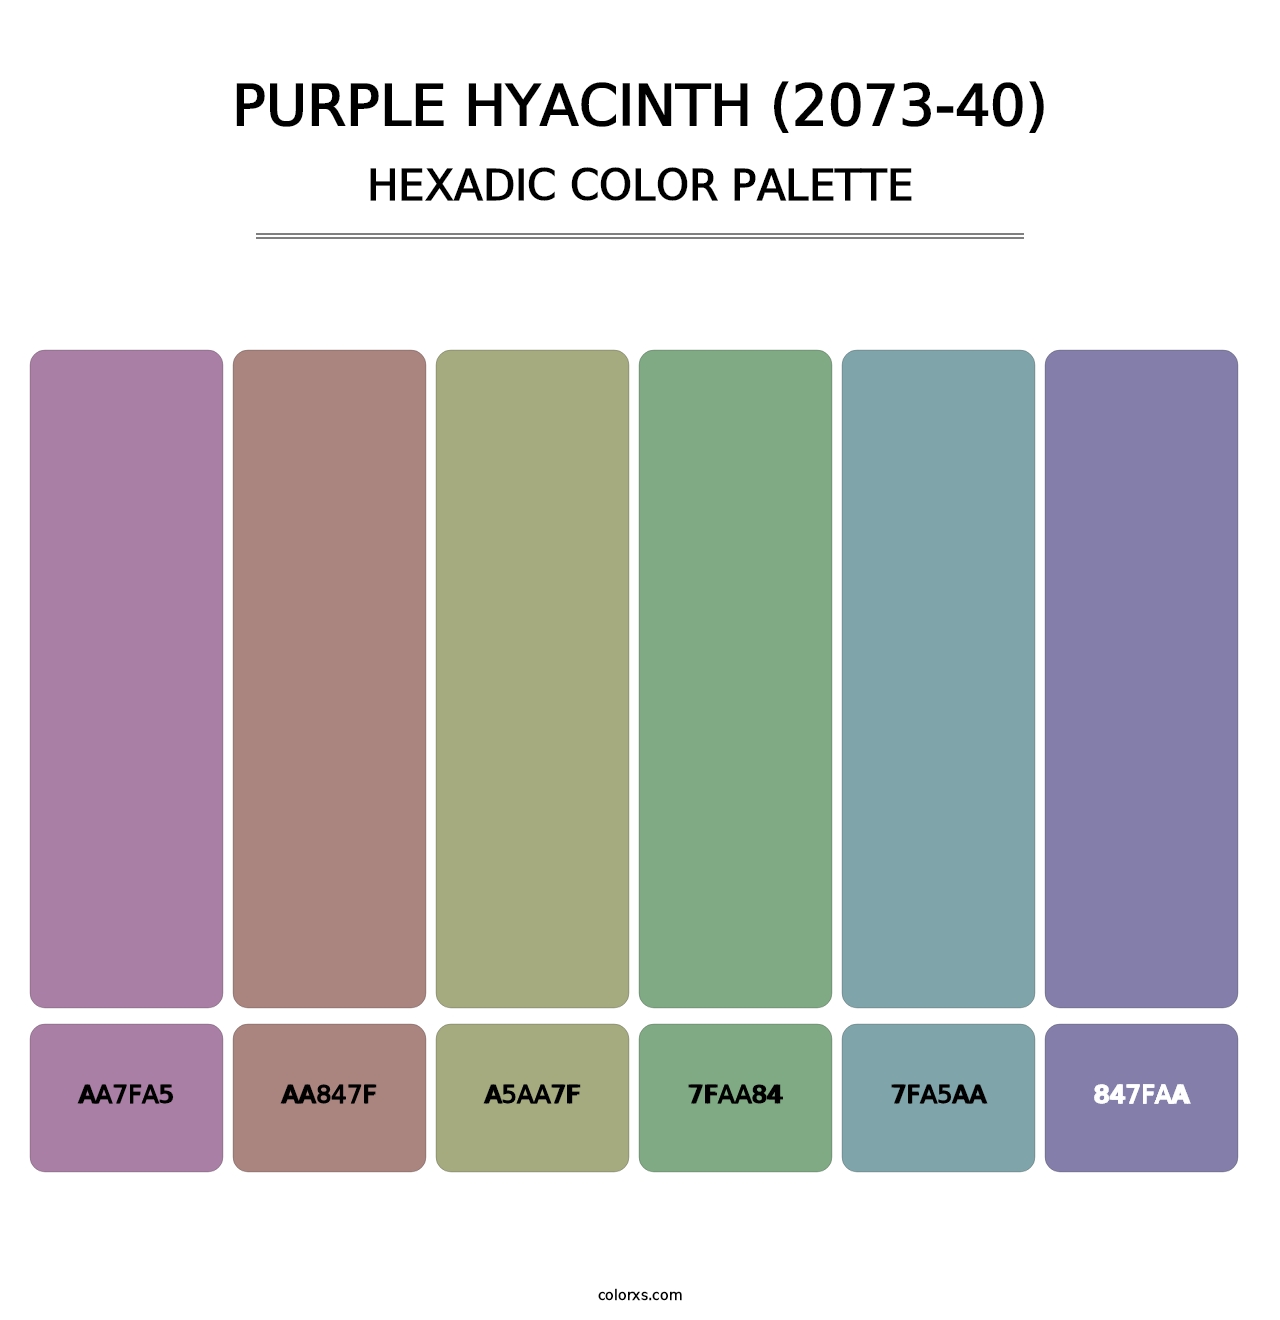 Purple Hyacinth (2073-40) - Hexadic Color Palette